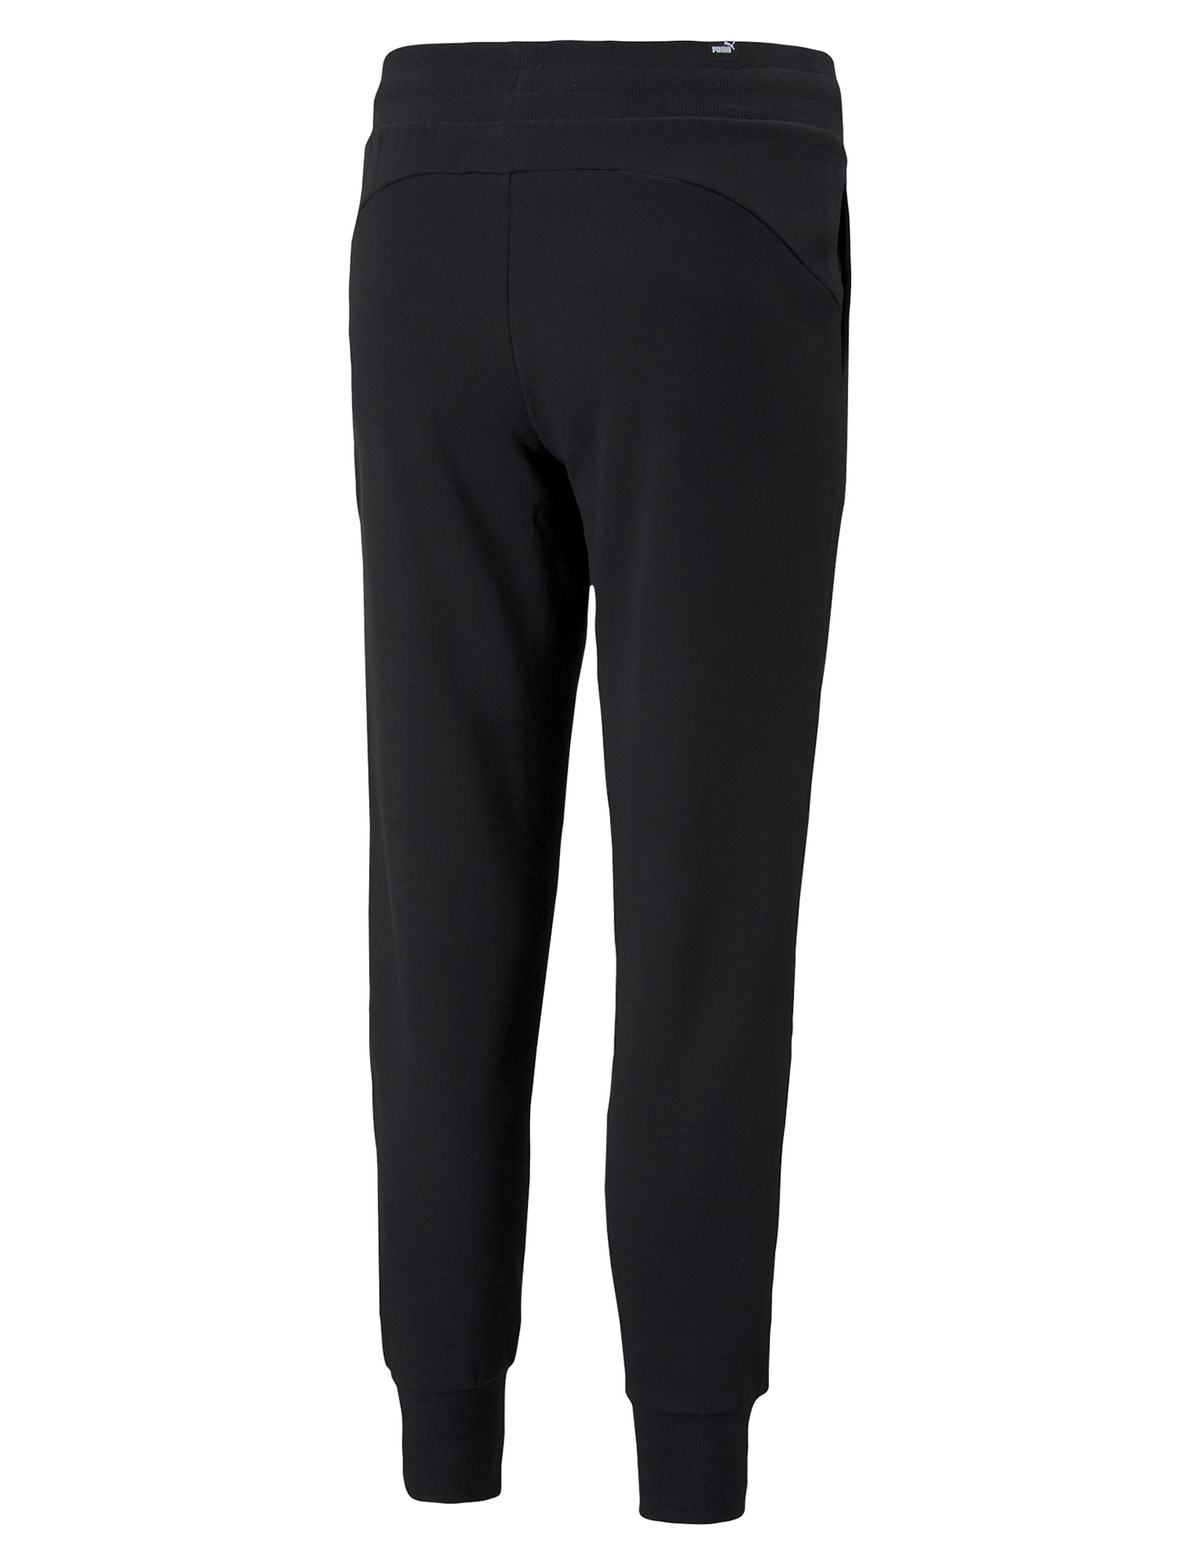 Buy Black & White Track Pants for Men by Puma Online | Ajio.com